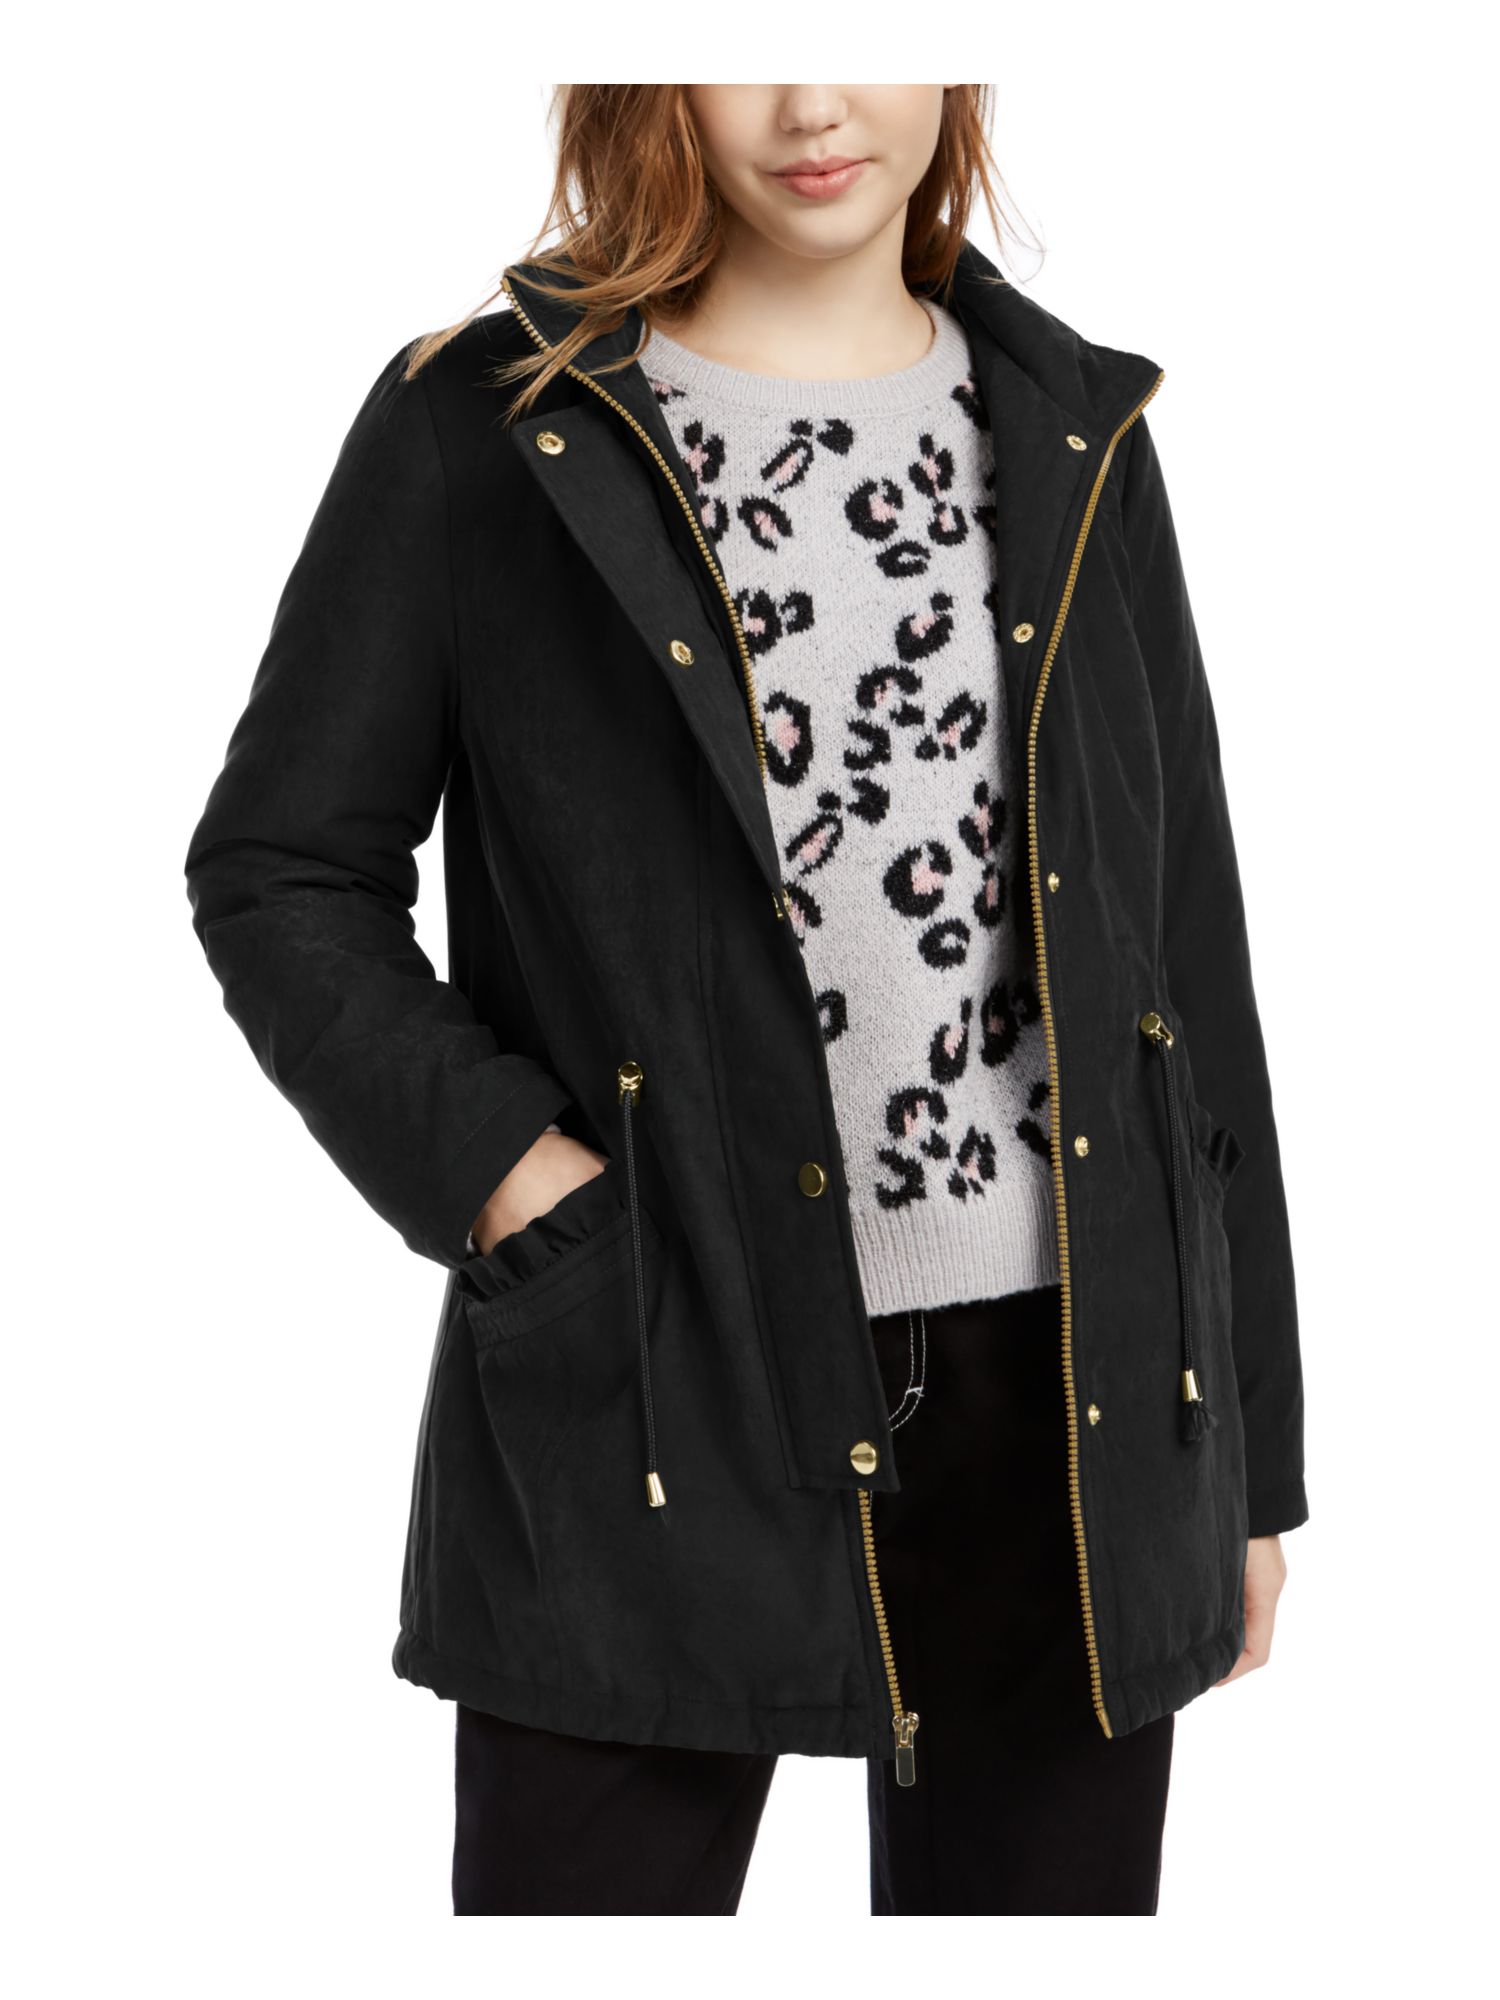 CELEBRITY PINK Womens Black Faux Fur Hood Parka Winter Jacket Coat Juniors M - image 3 of 4